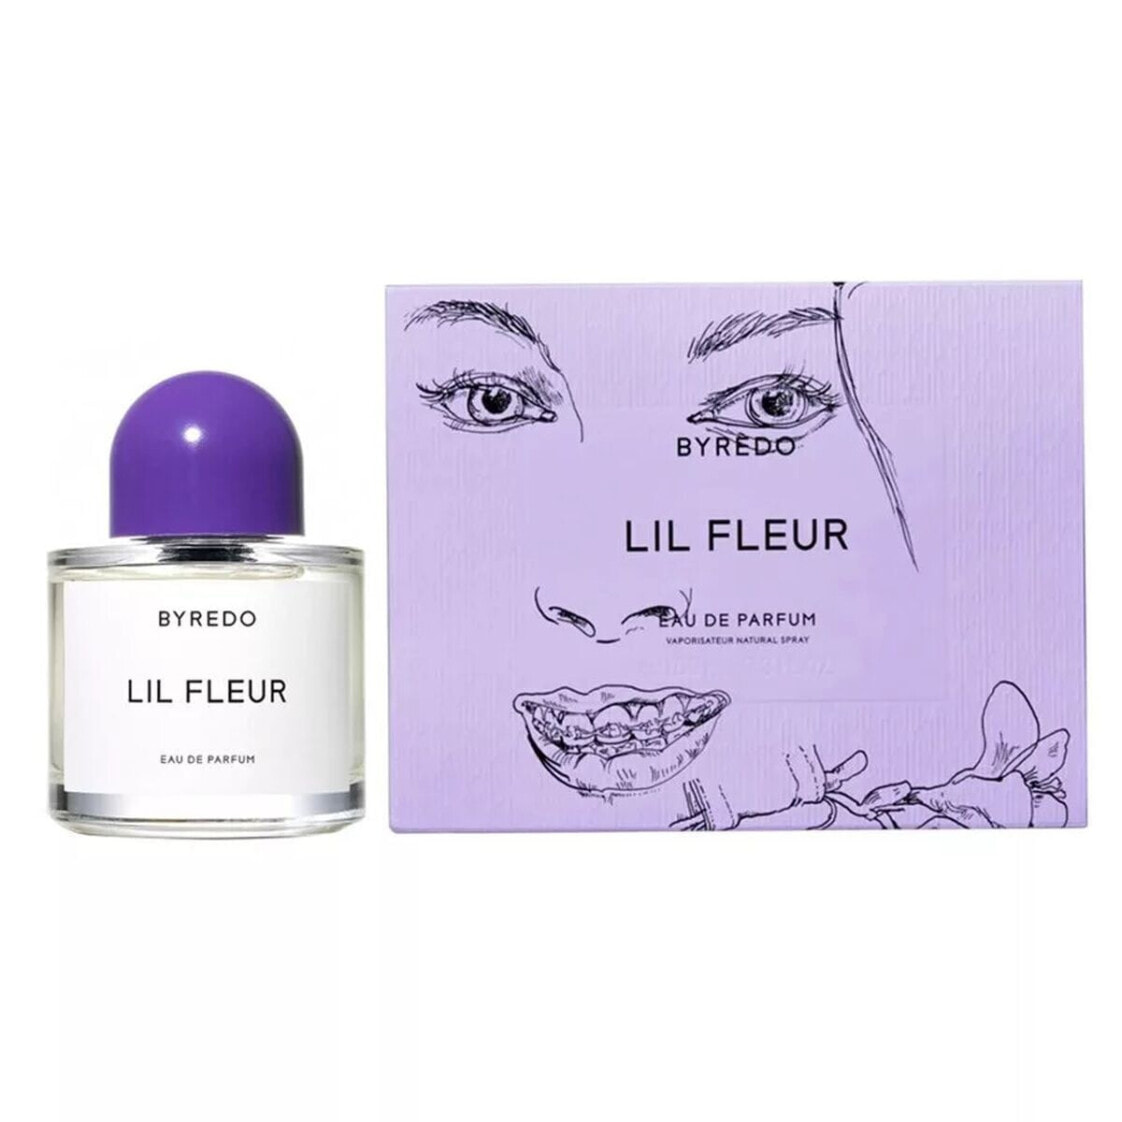 Байредо флер. Byredo Lil fleur Limited Edition. Byredo Lilly fleur. Byredo Lil fleur EDP 50 ml. Парфюм Byredo Lil fleur Cassis 100ml.